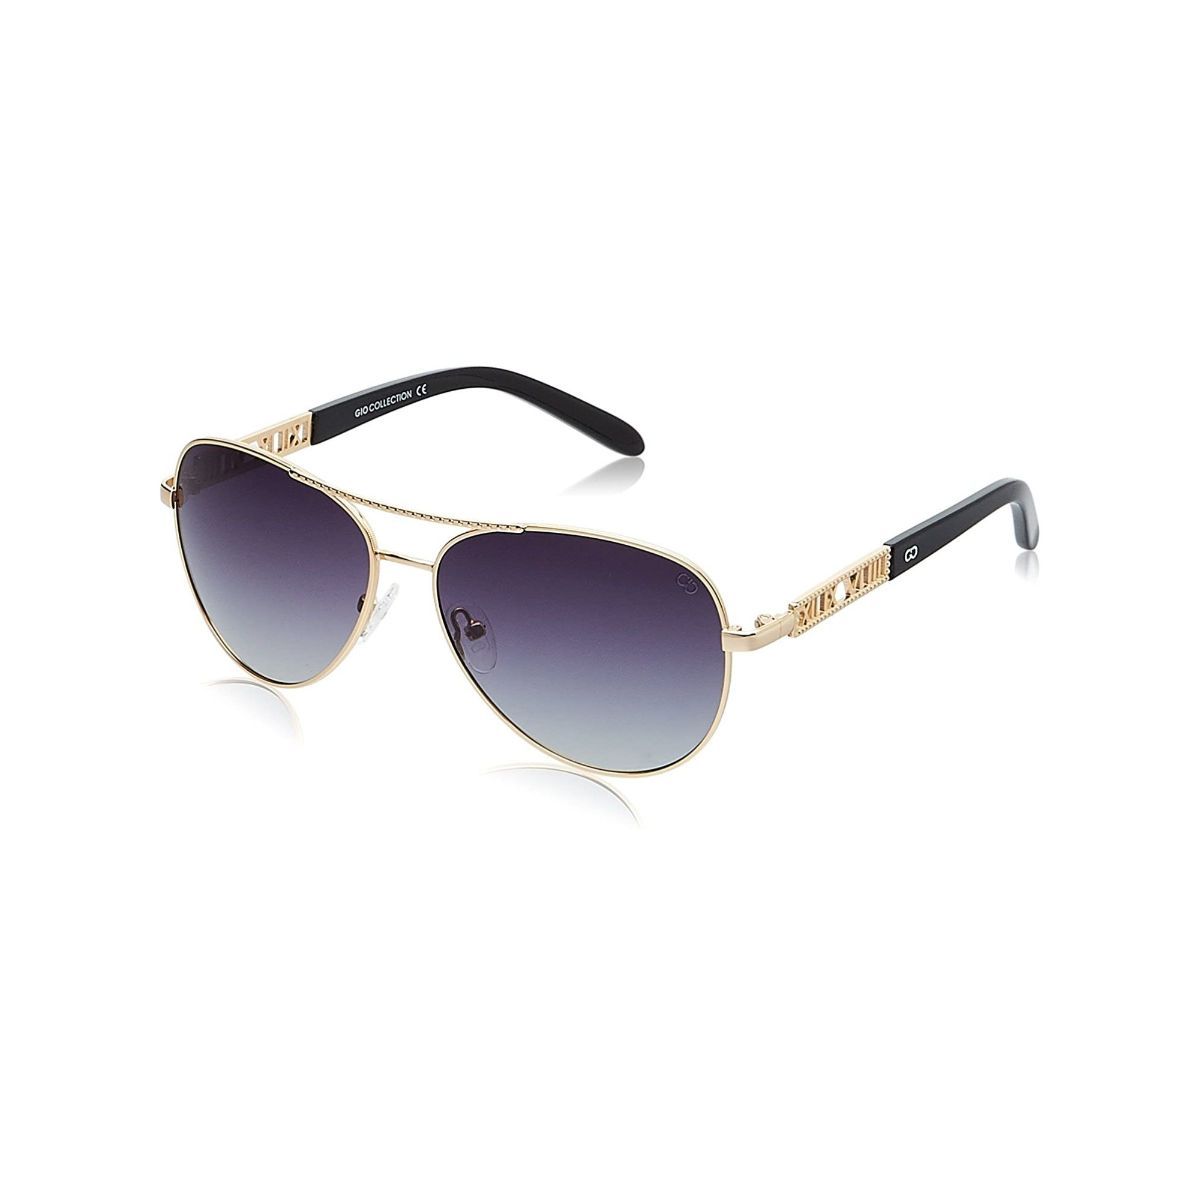 Buy Gio Collection Aviator Women Sunglasses - Brown Online